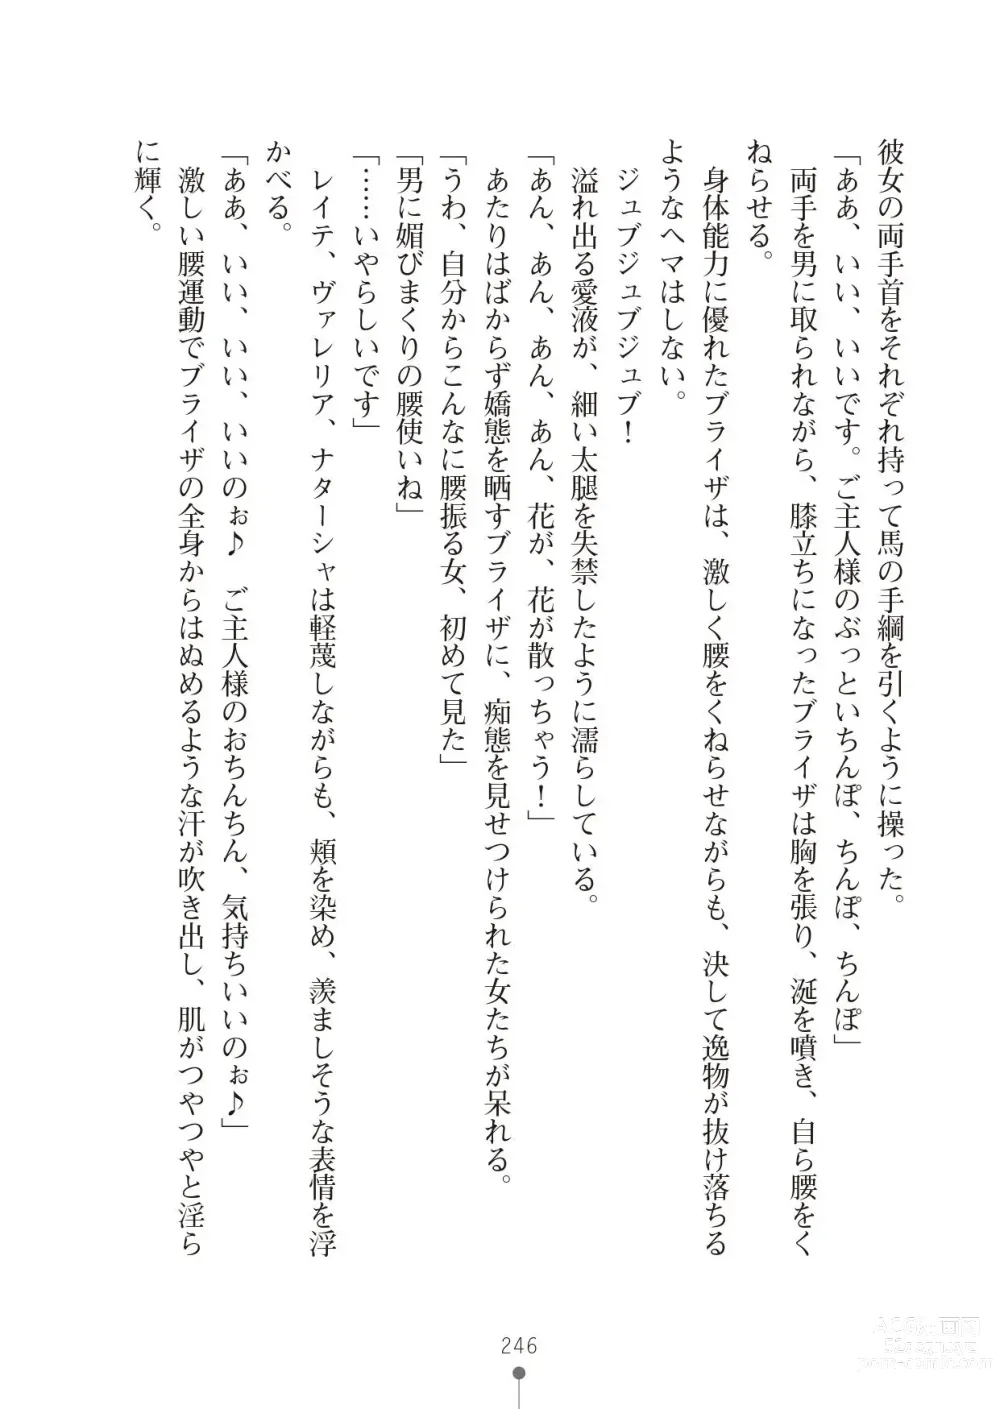 Page 246 of manga Harem Resistance 2